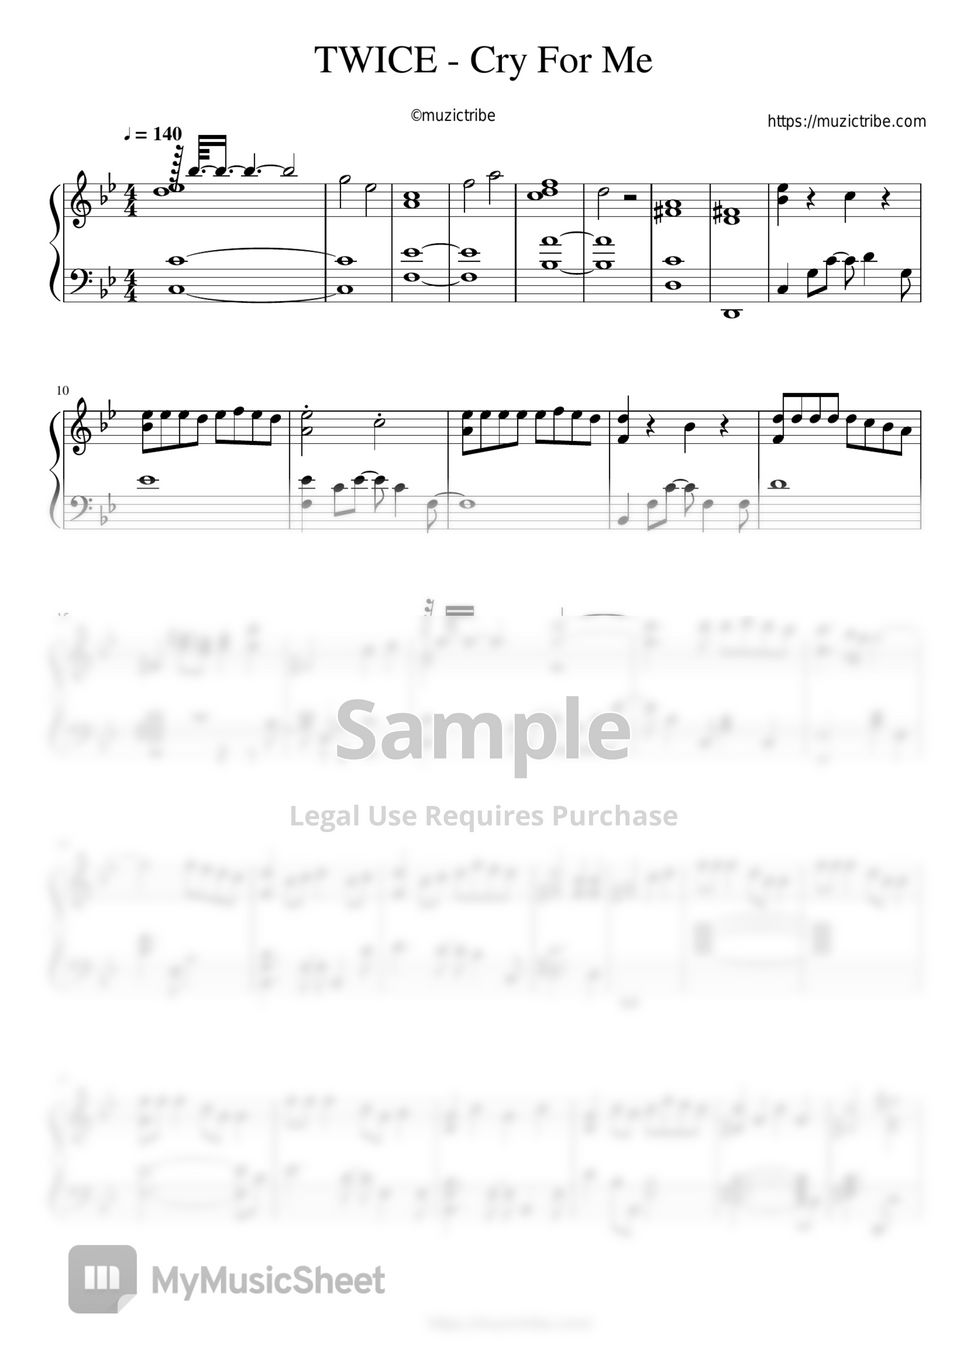 TWICE - CRY FOR ME - Piano Sheet + MIDI + MP3